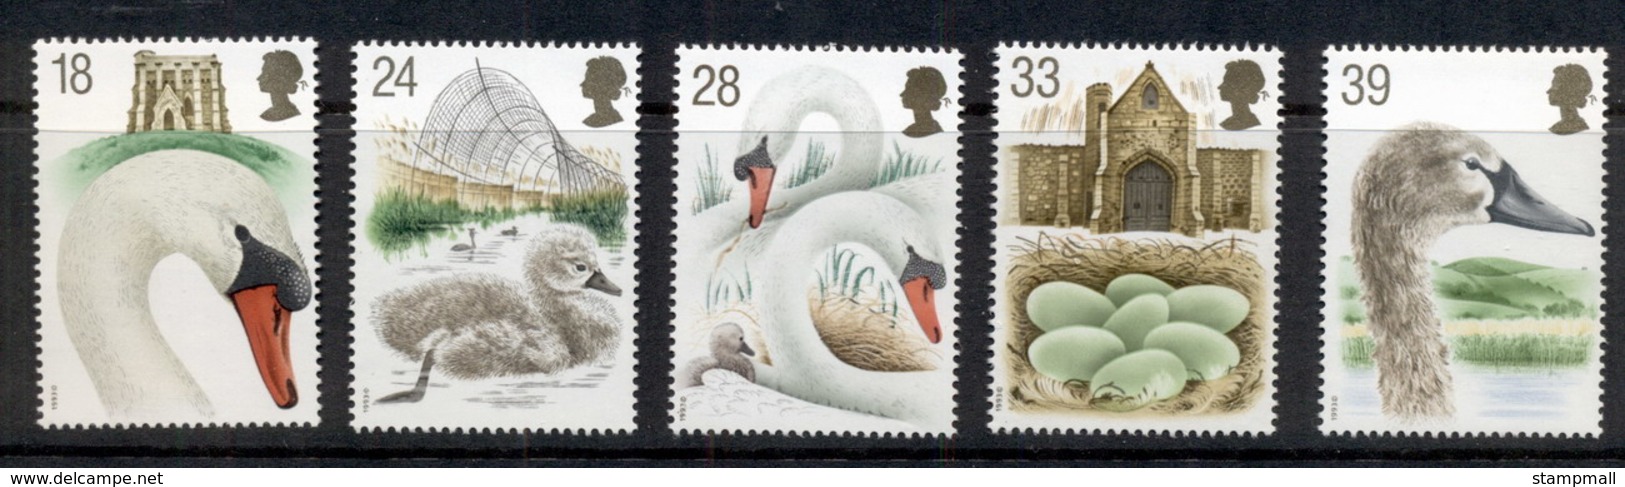 GB 1993 Abbotsbury Swans, Birds MUH - Unclassified